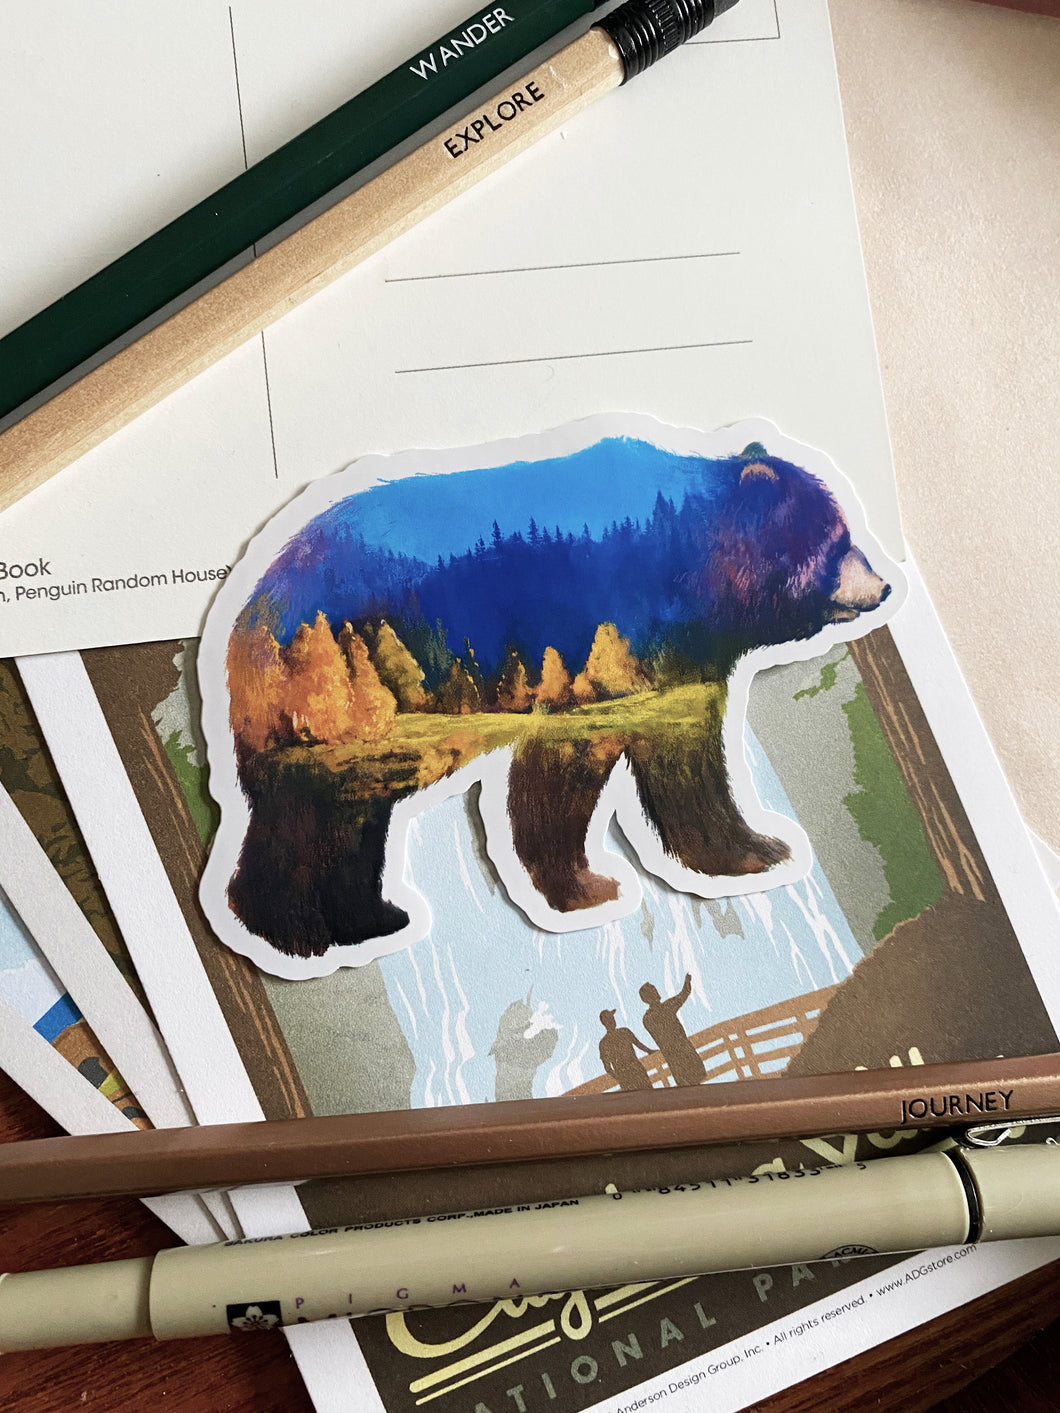 Mountain bear Sticker